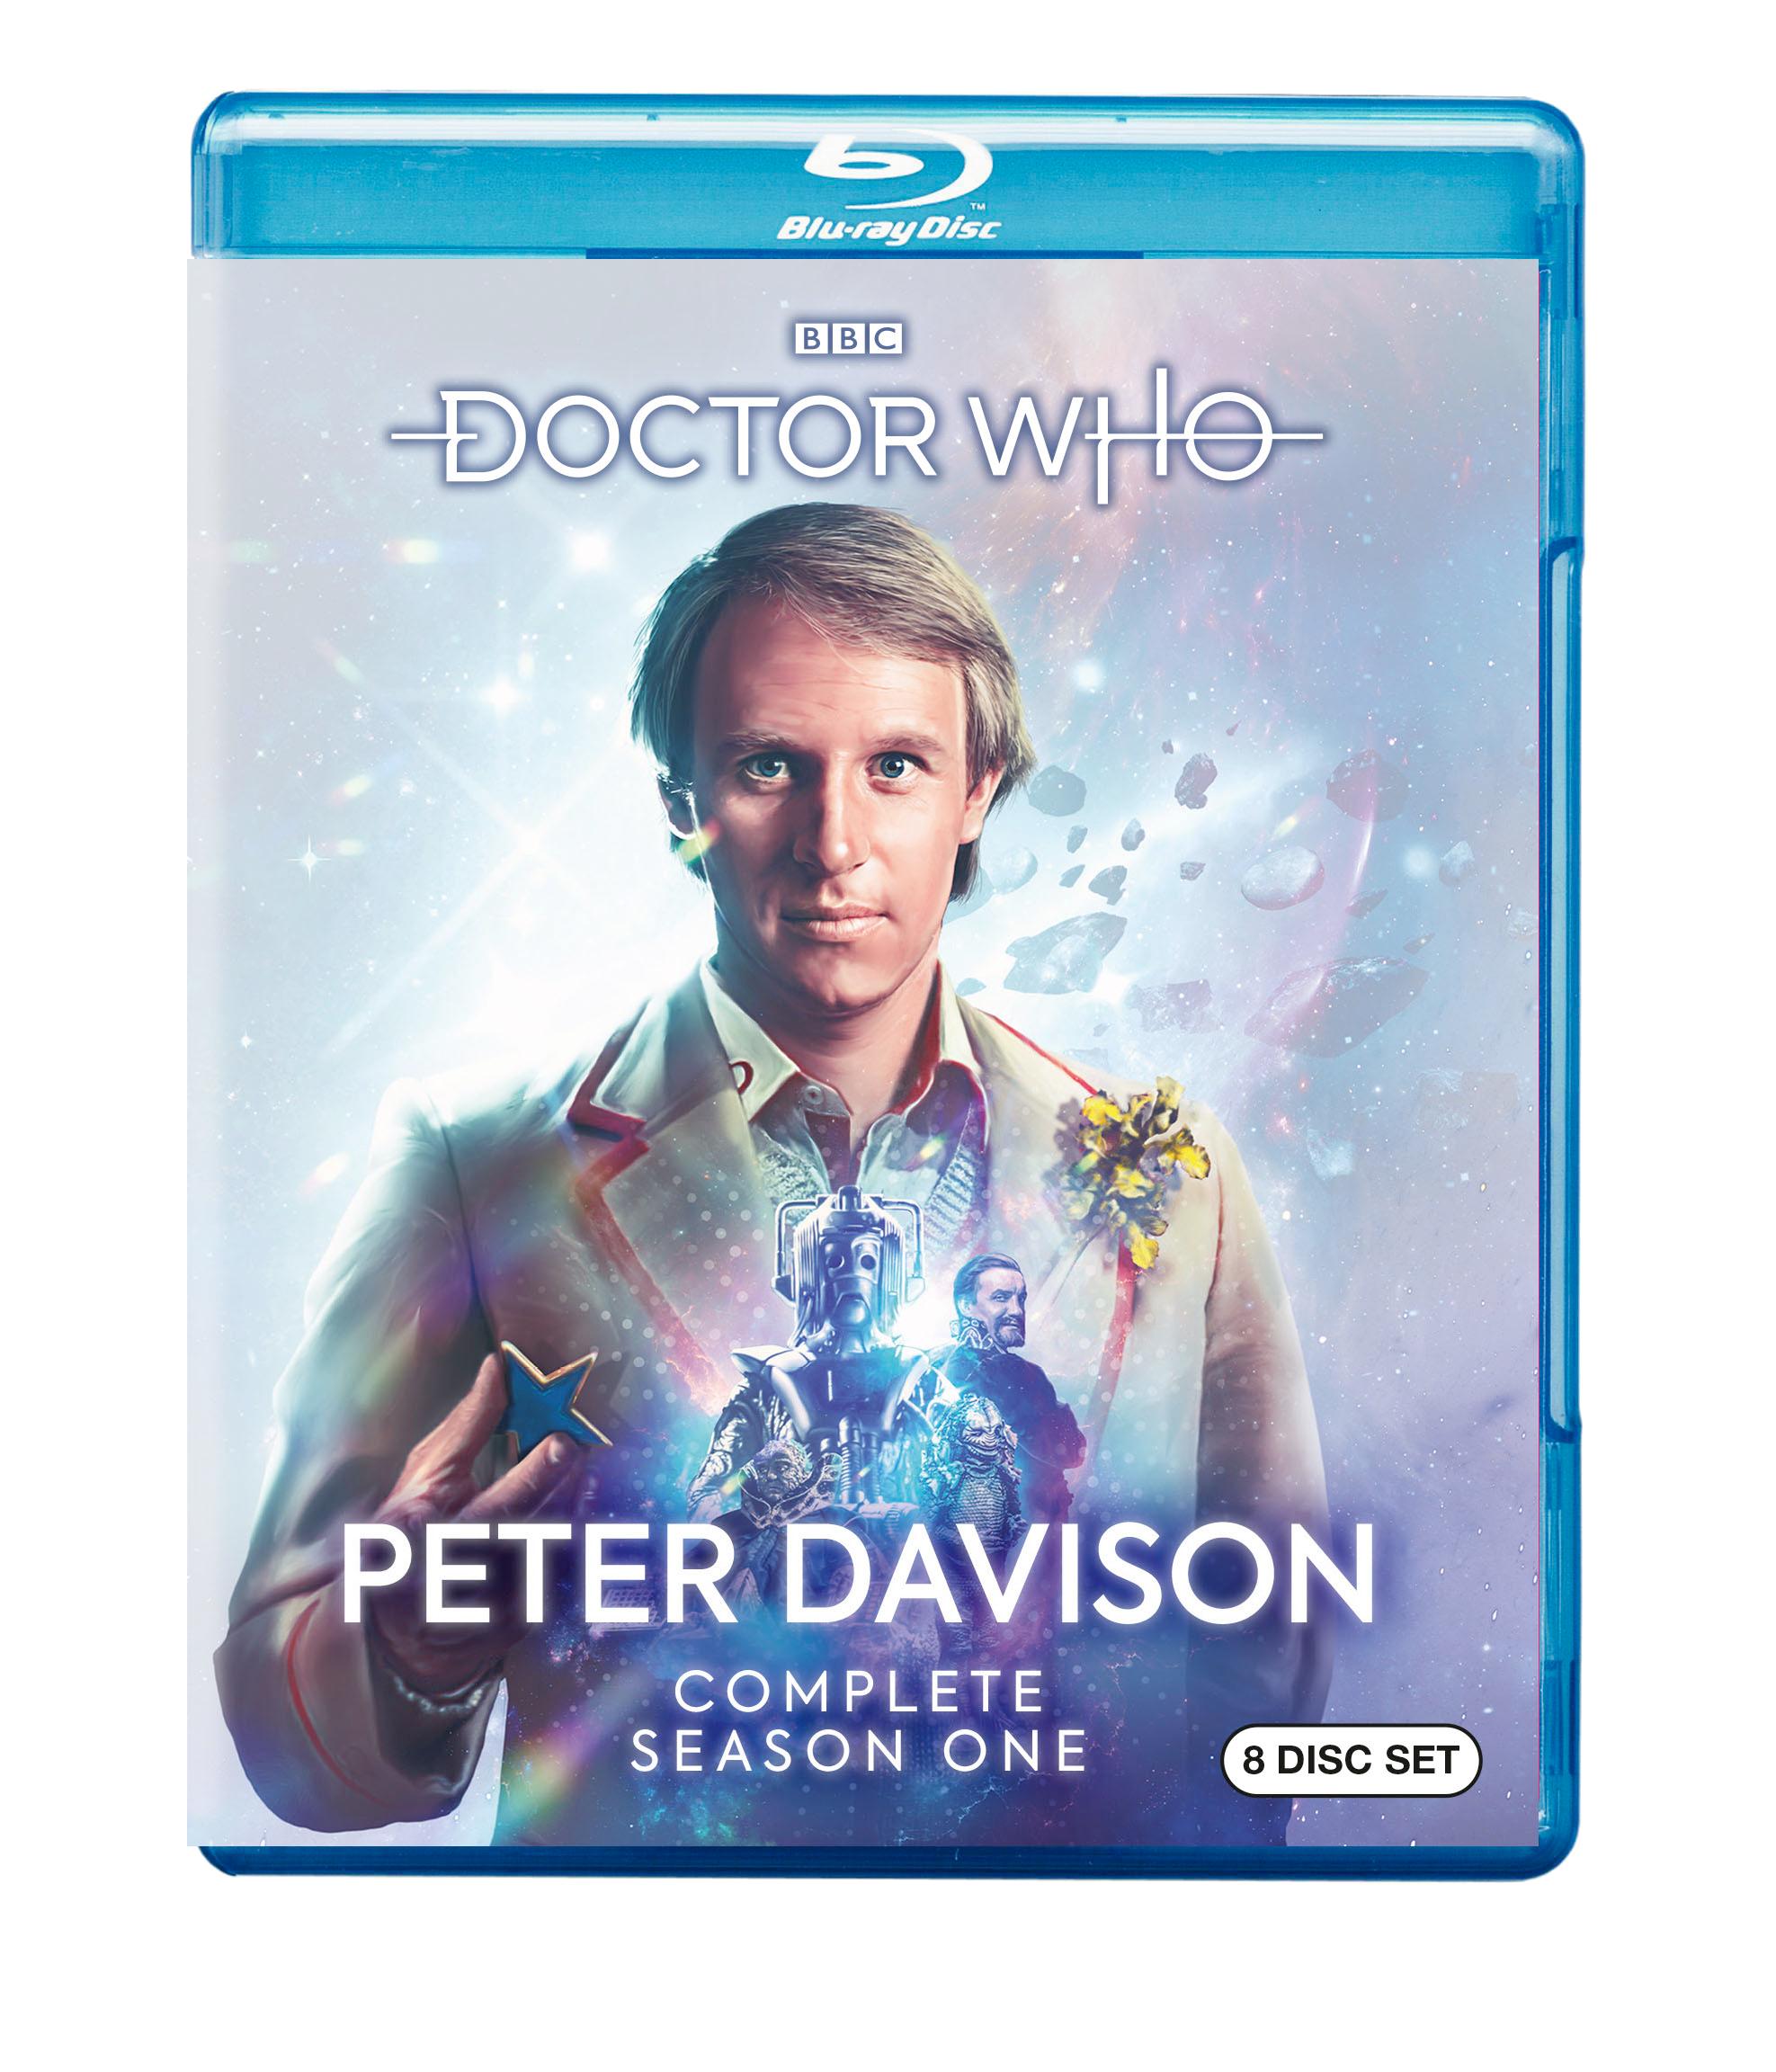 Doctor Who: Peter Davison - Complete Season One (Box Set) (Box Set) - Blu-ray [ 2019 ]  - Sci Fi Television On Blu-ray - TV Shows On GRUV